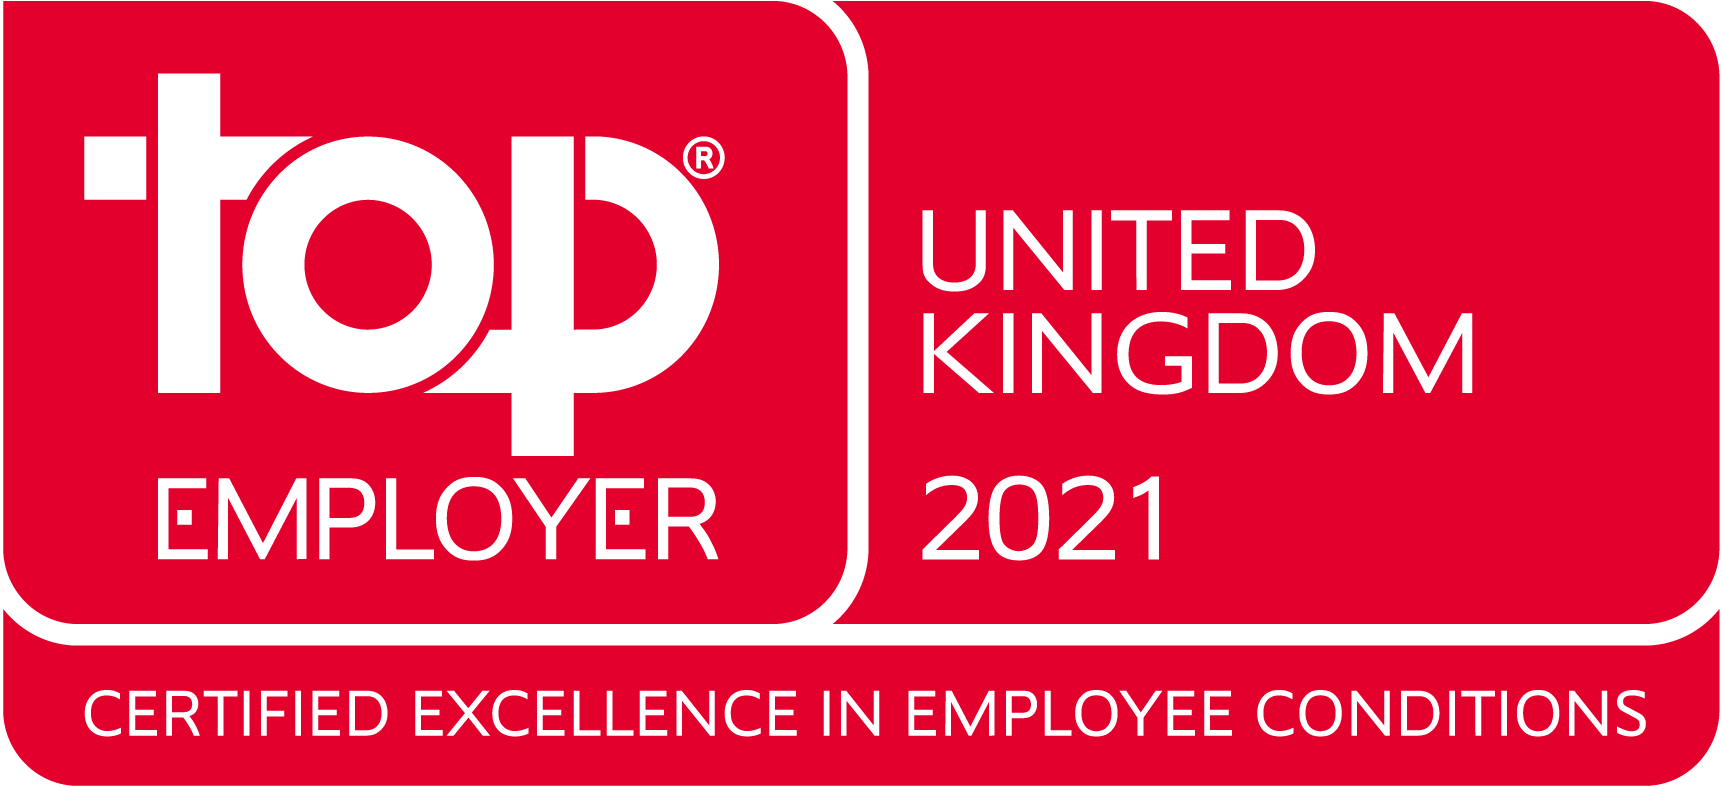 Top Employer United Kingdom 2021